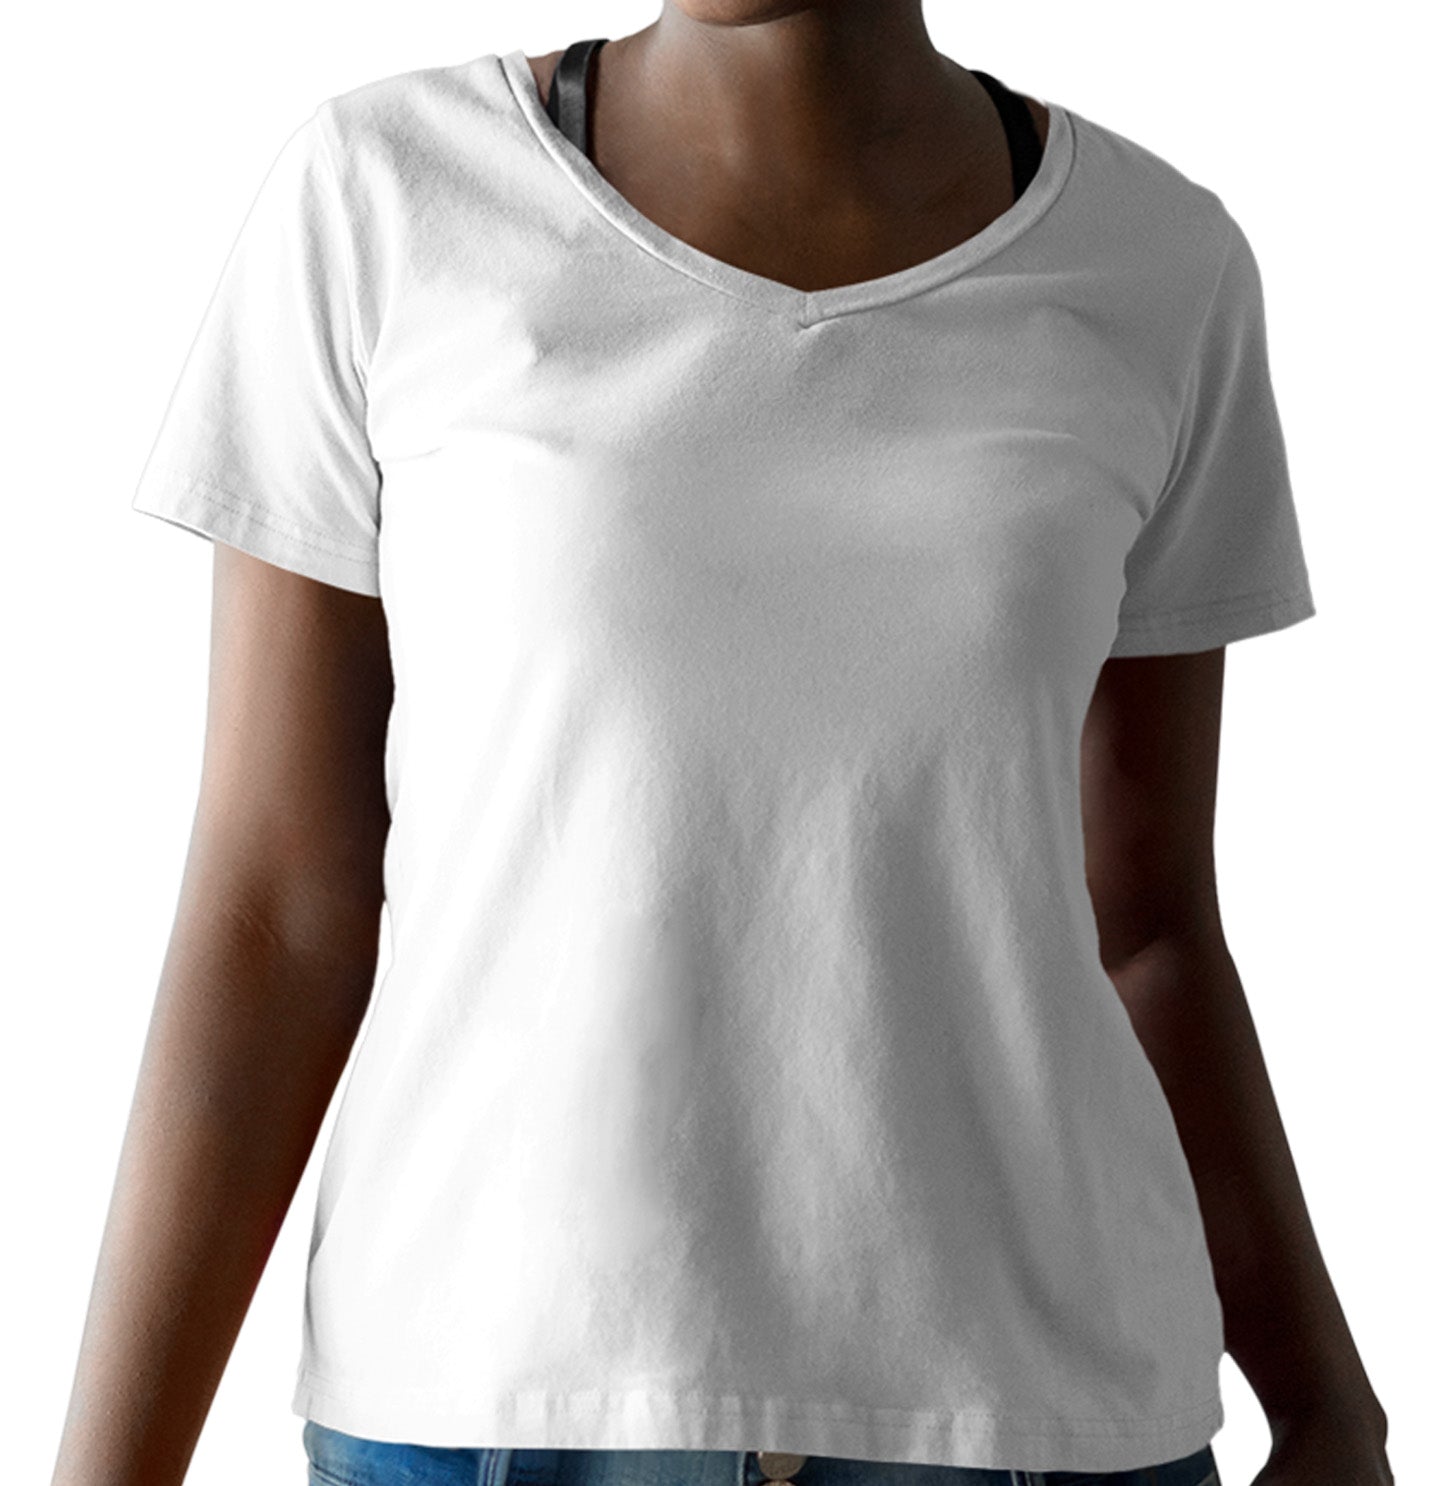 Dachshund Mom Paw Text - Personalized Custom Women's V-Neck T-Shirt